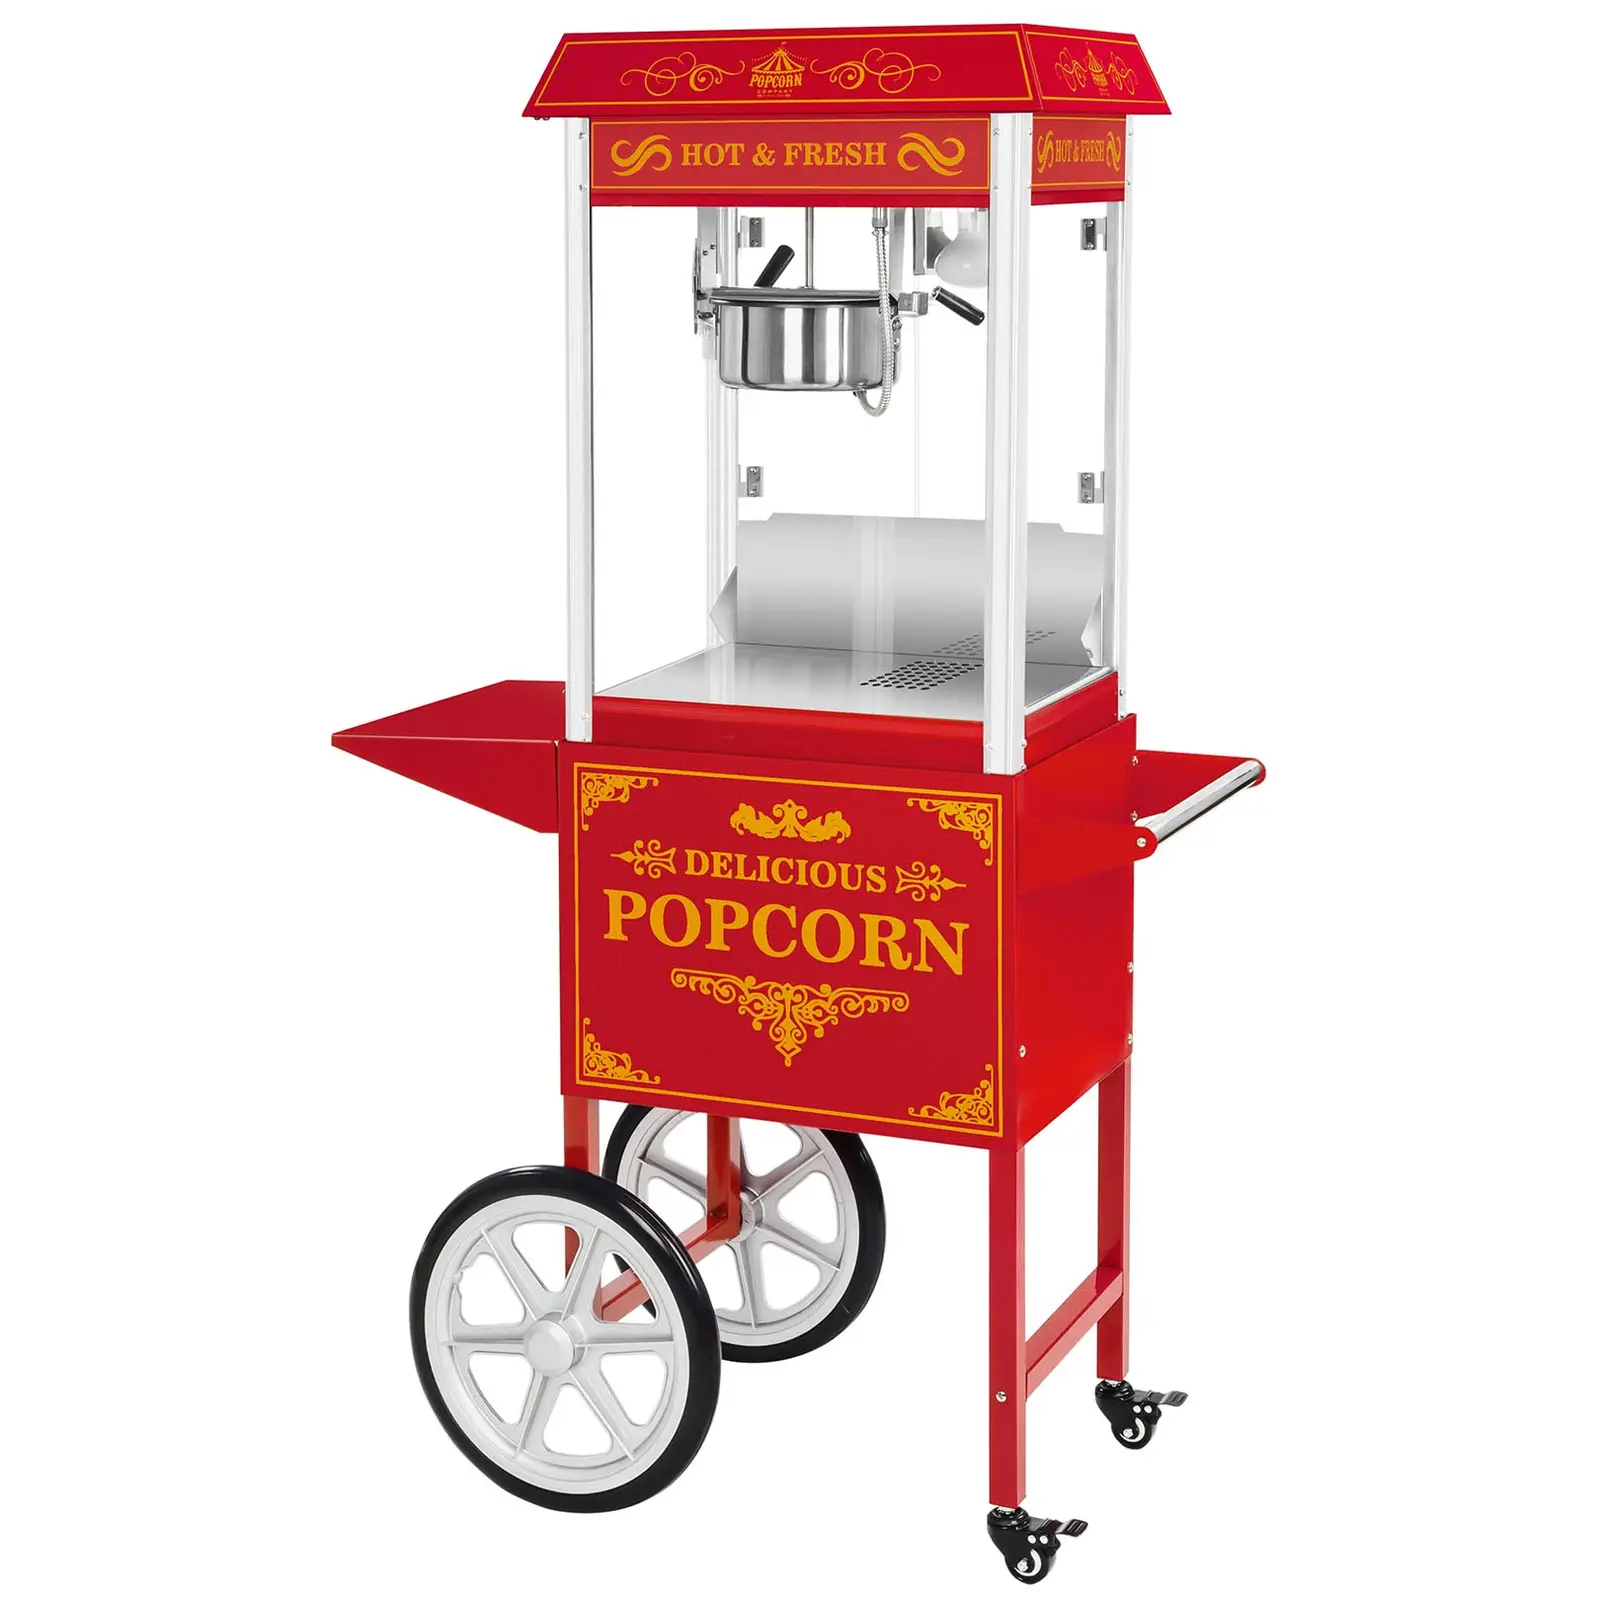 Popcornmaskine med vogn - retrodesign - rød